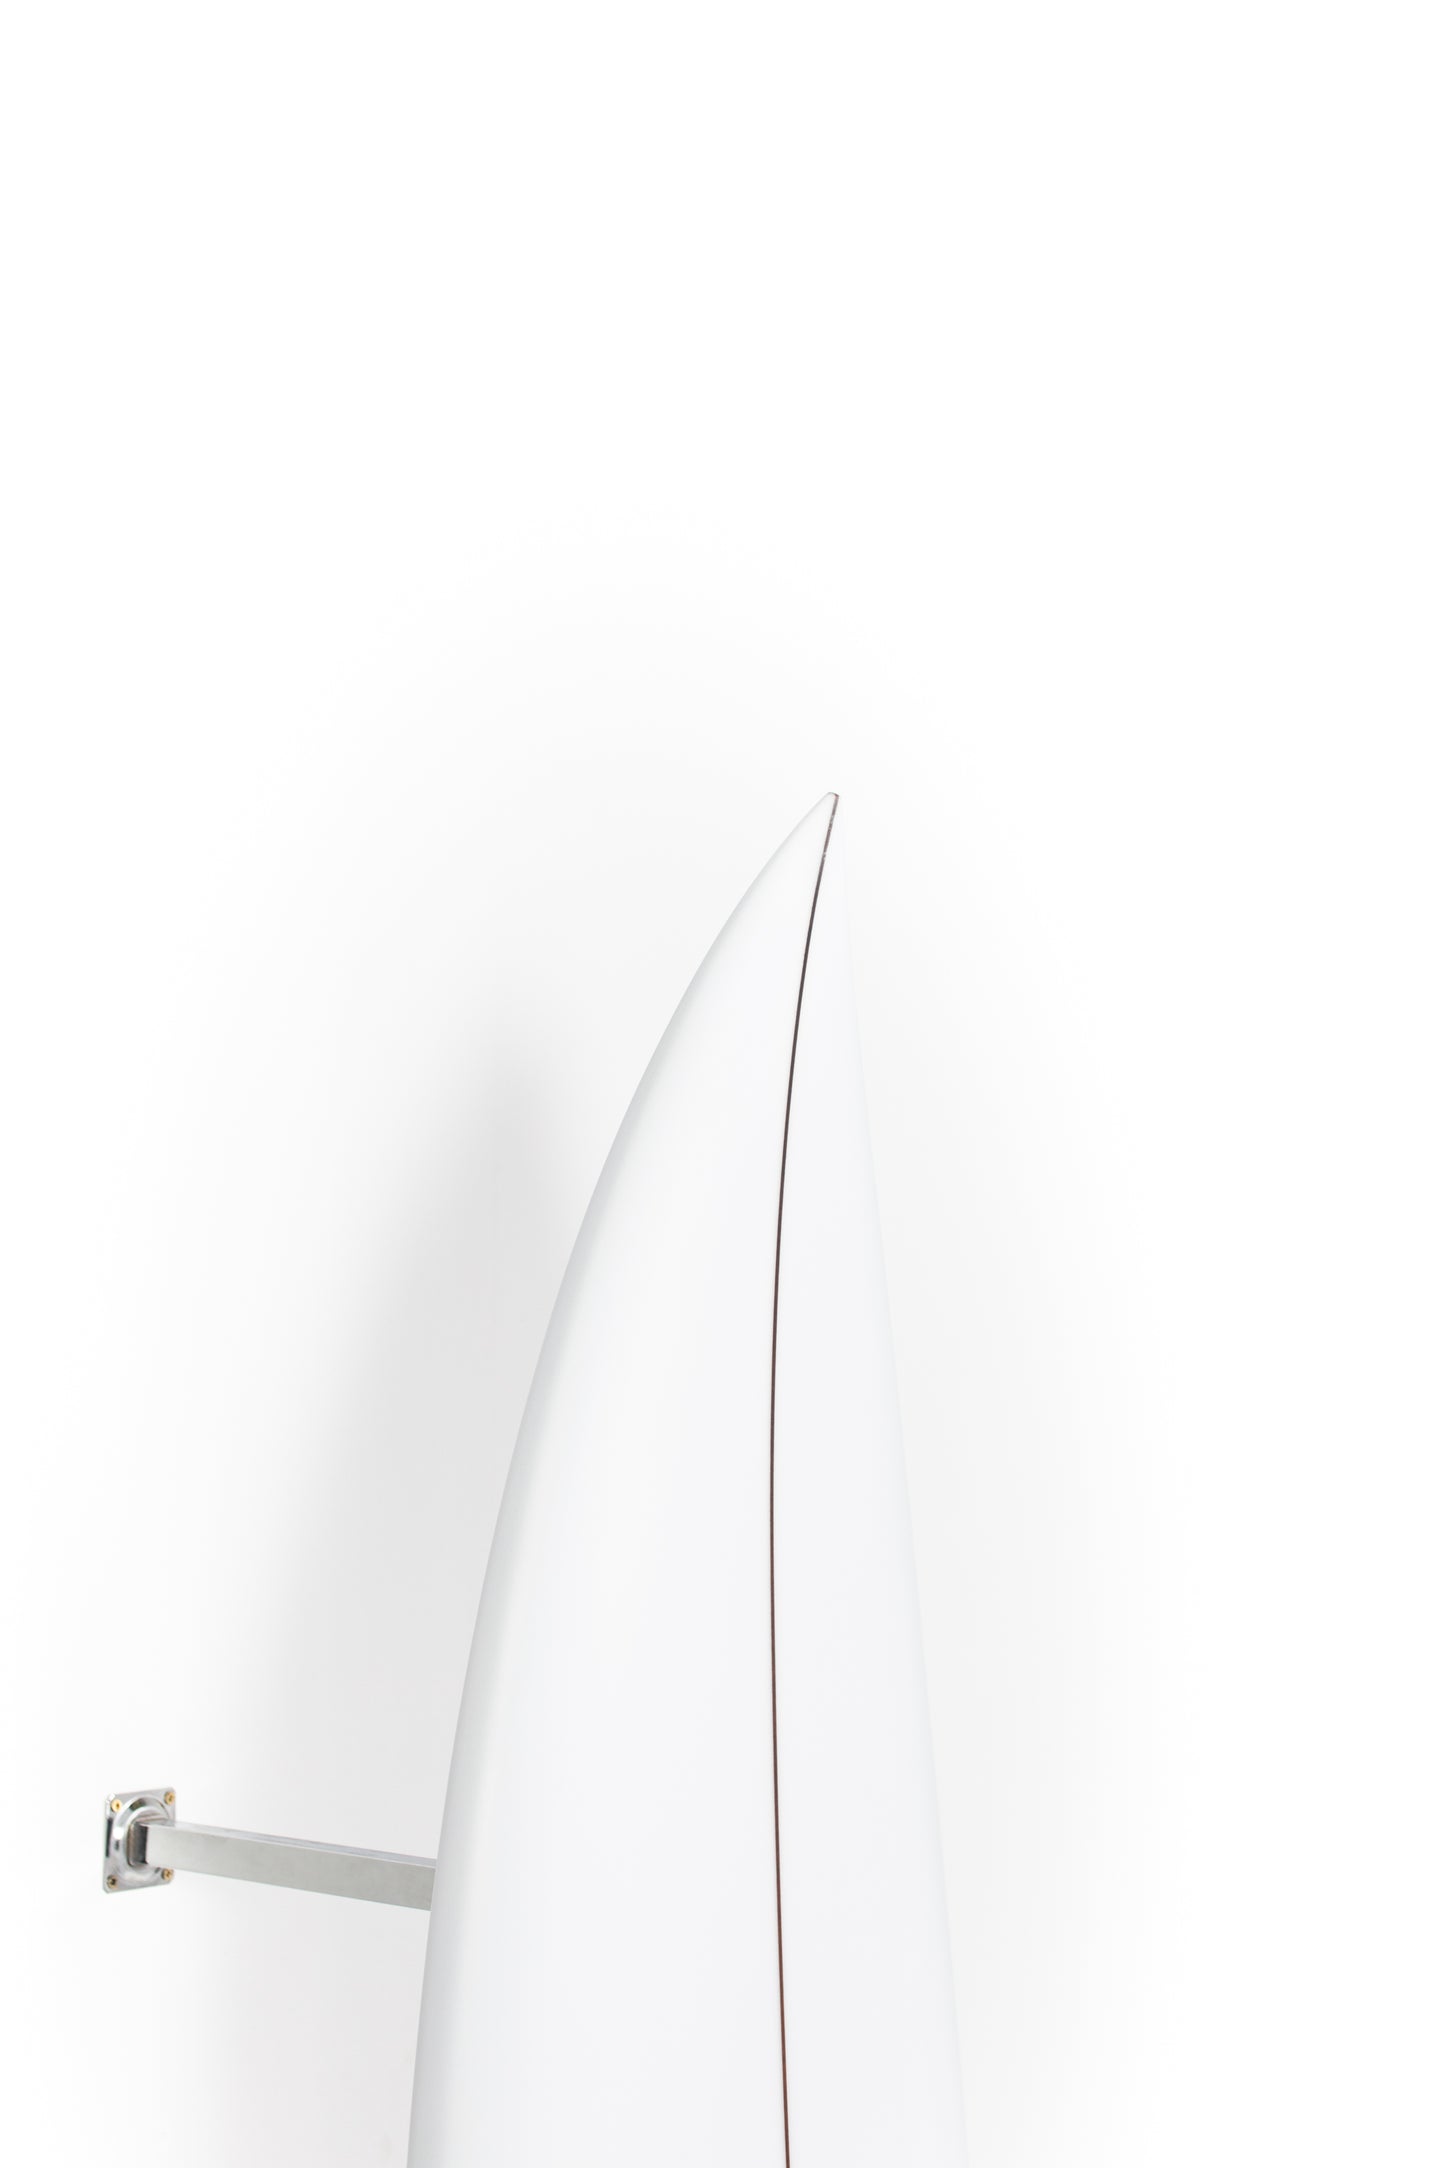 
                  
                    Pukas Surf Shop - Channel Islands - CI 2.PRO by Britt Merrick - 6'1" x 19 1/4" x 2 1/2" - 31.22L - CI28755
                  
                